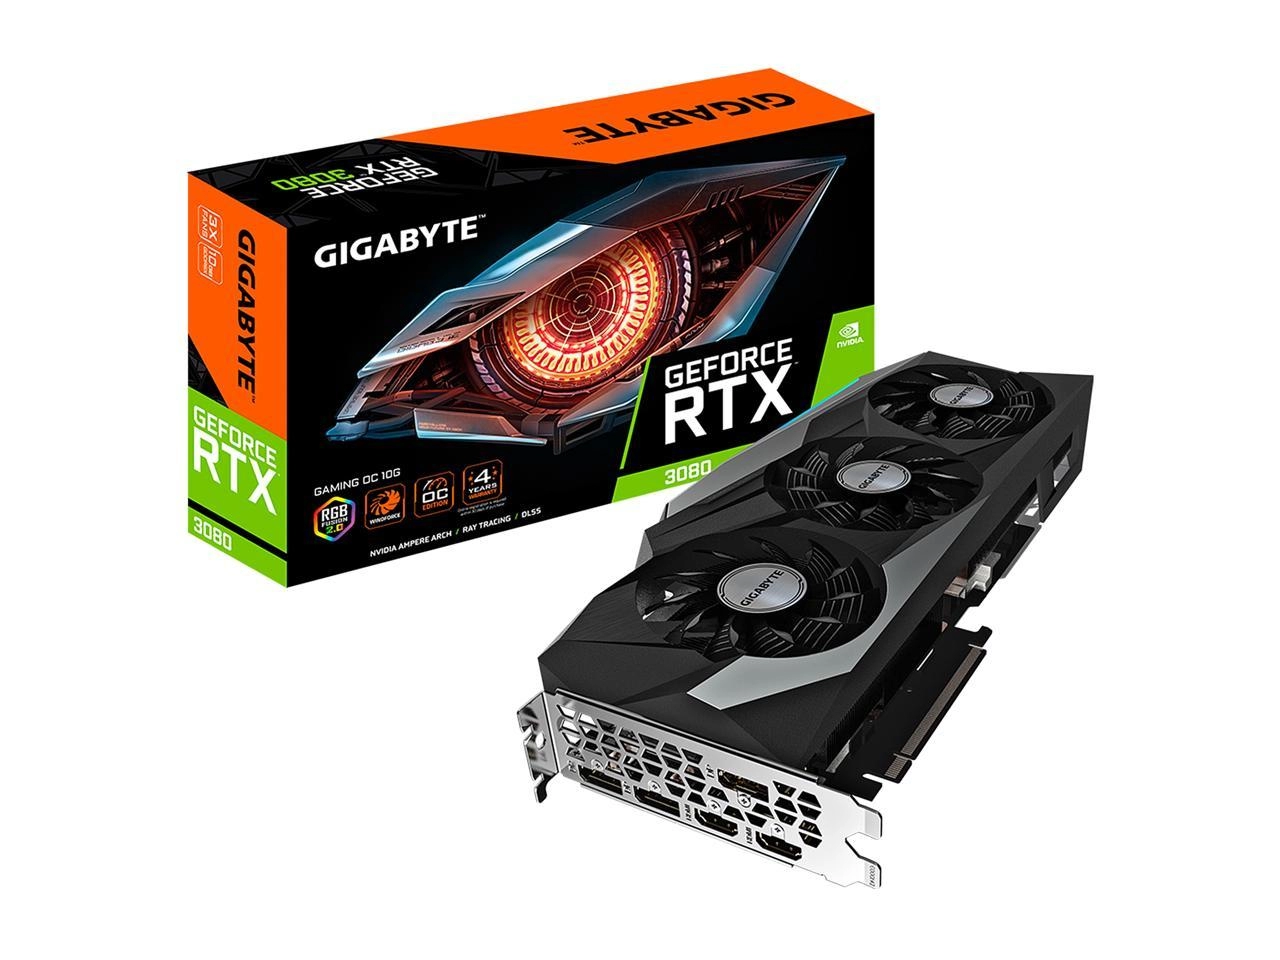 GIGABYTE GeForce RTX 3080 GAMING OC 10G Package